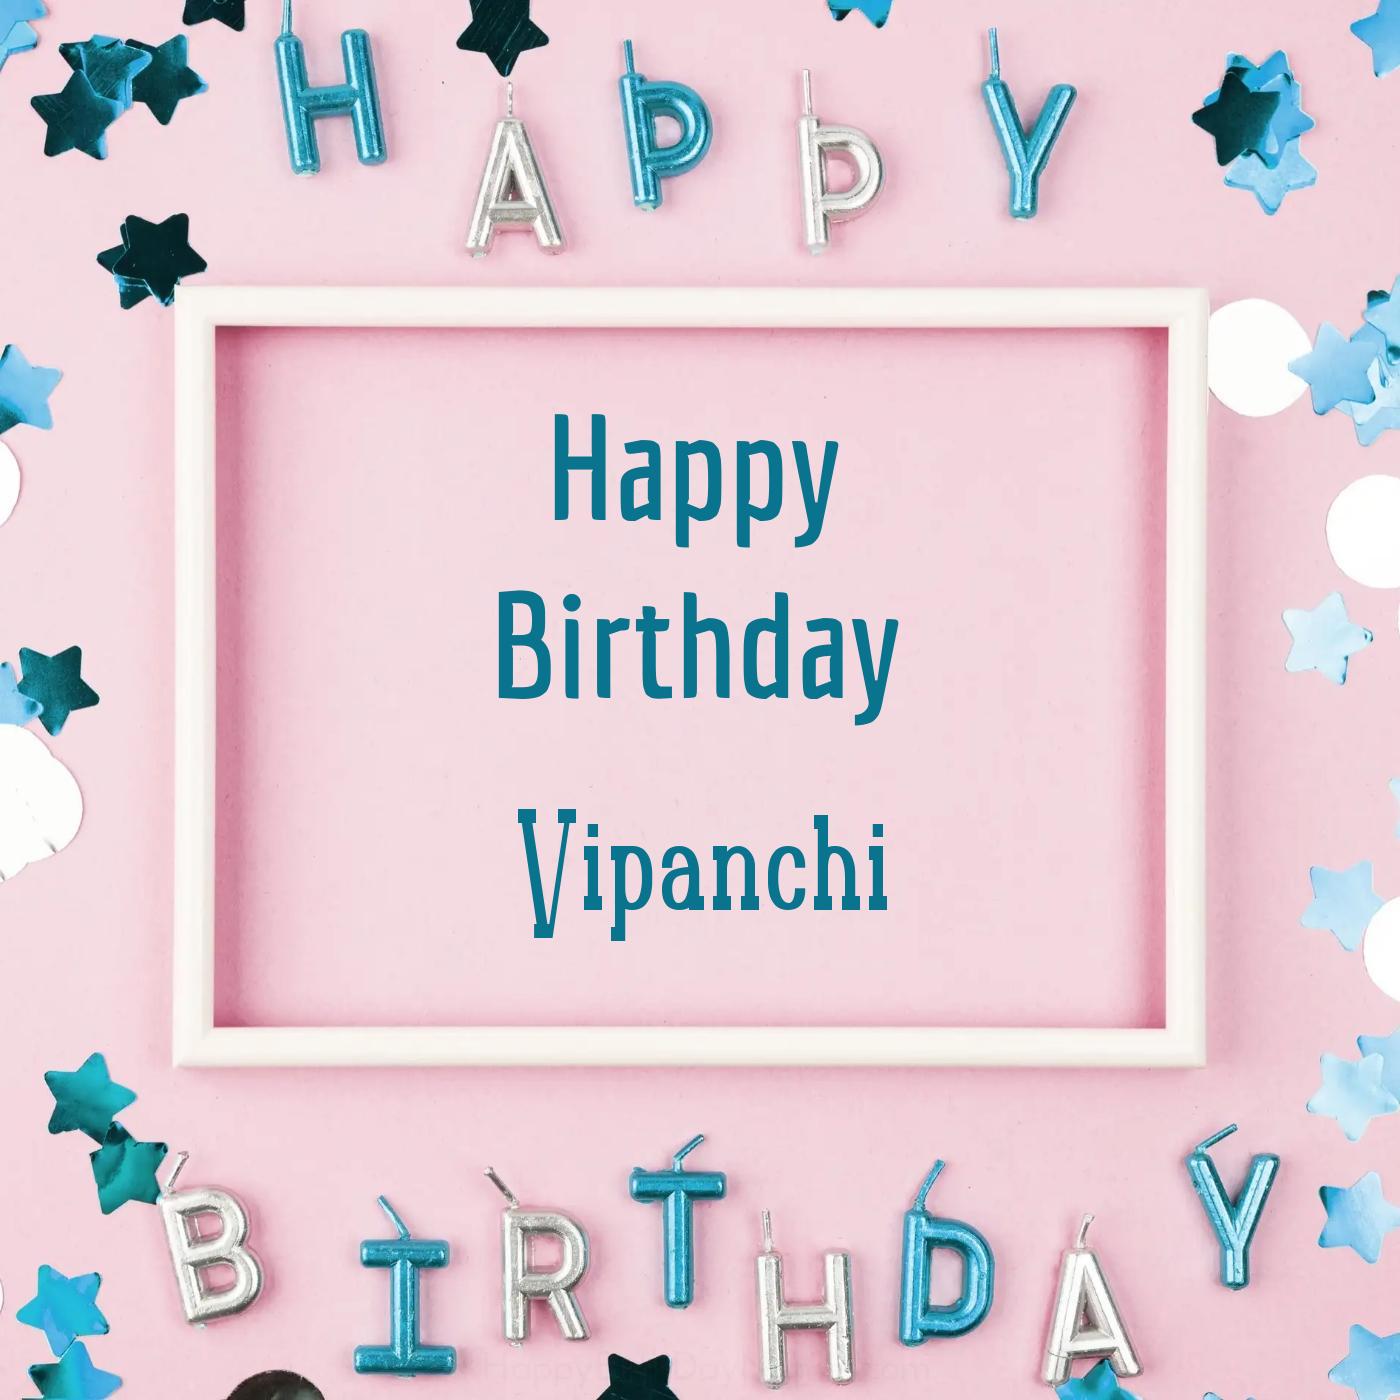 Happy Birthday Vipanchi Pink Frame Card